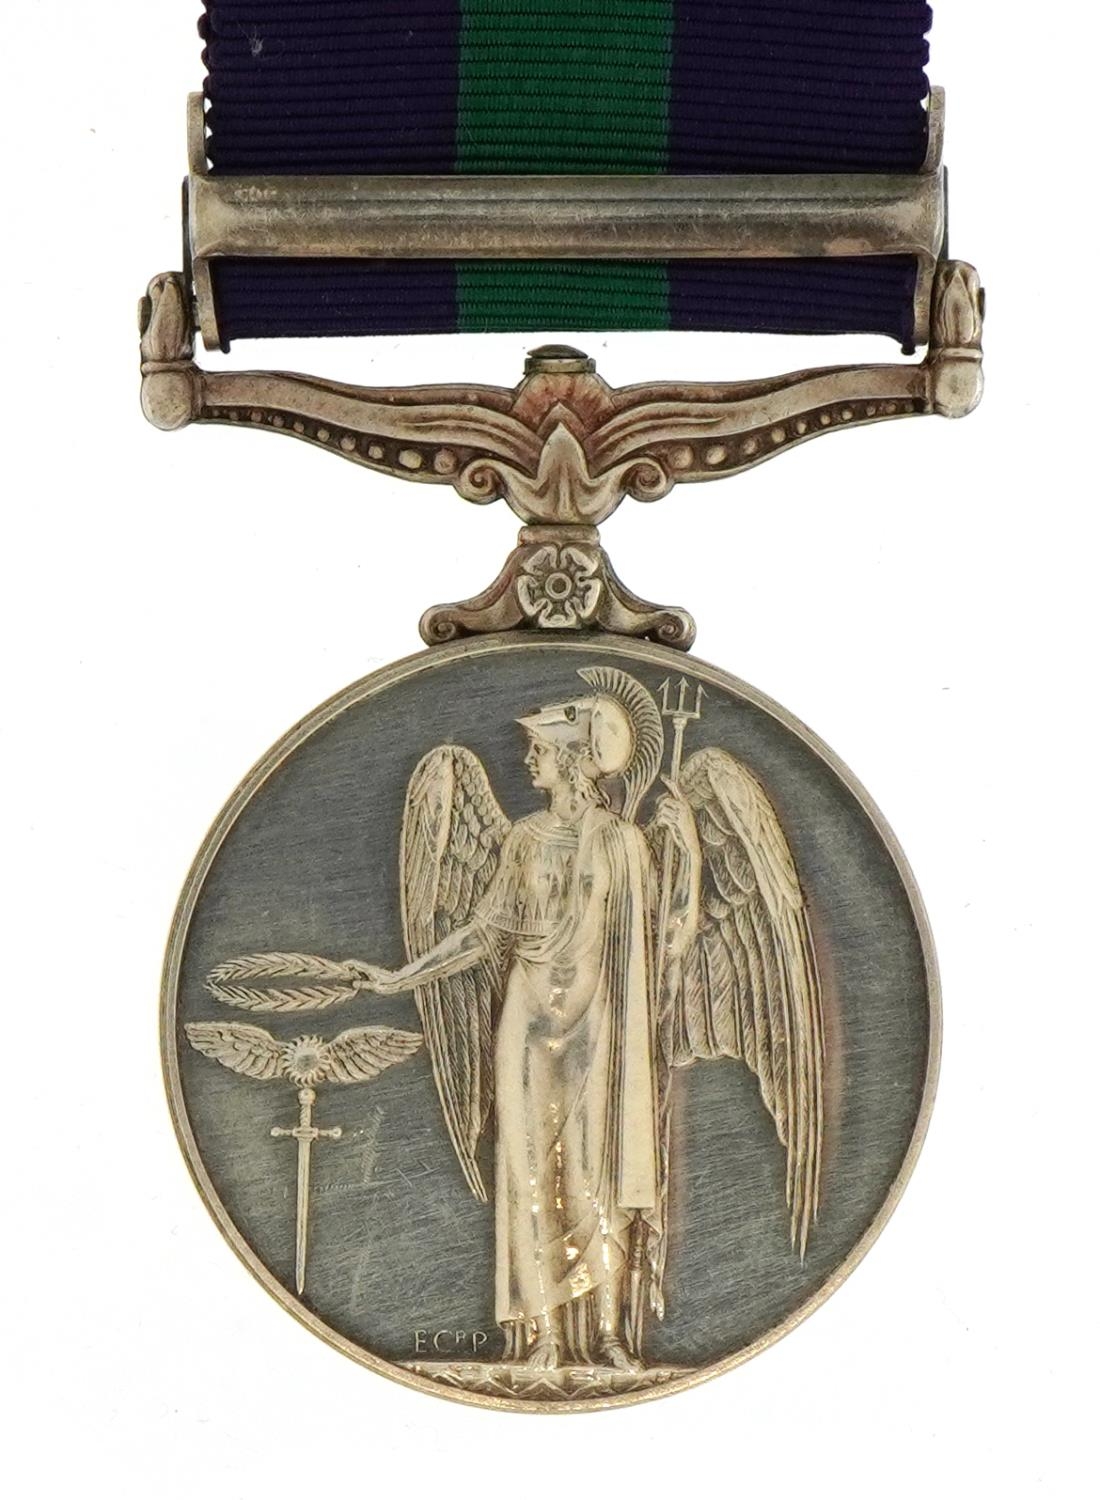 British military Elizabeth II General Service medal with Malaya bar awarded to 22007469SIG.J. - Image 3 of 4